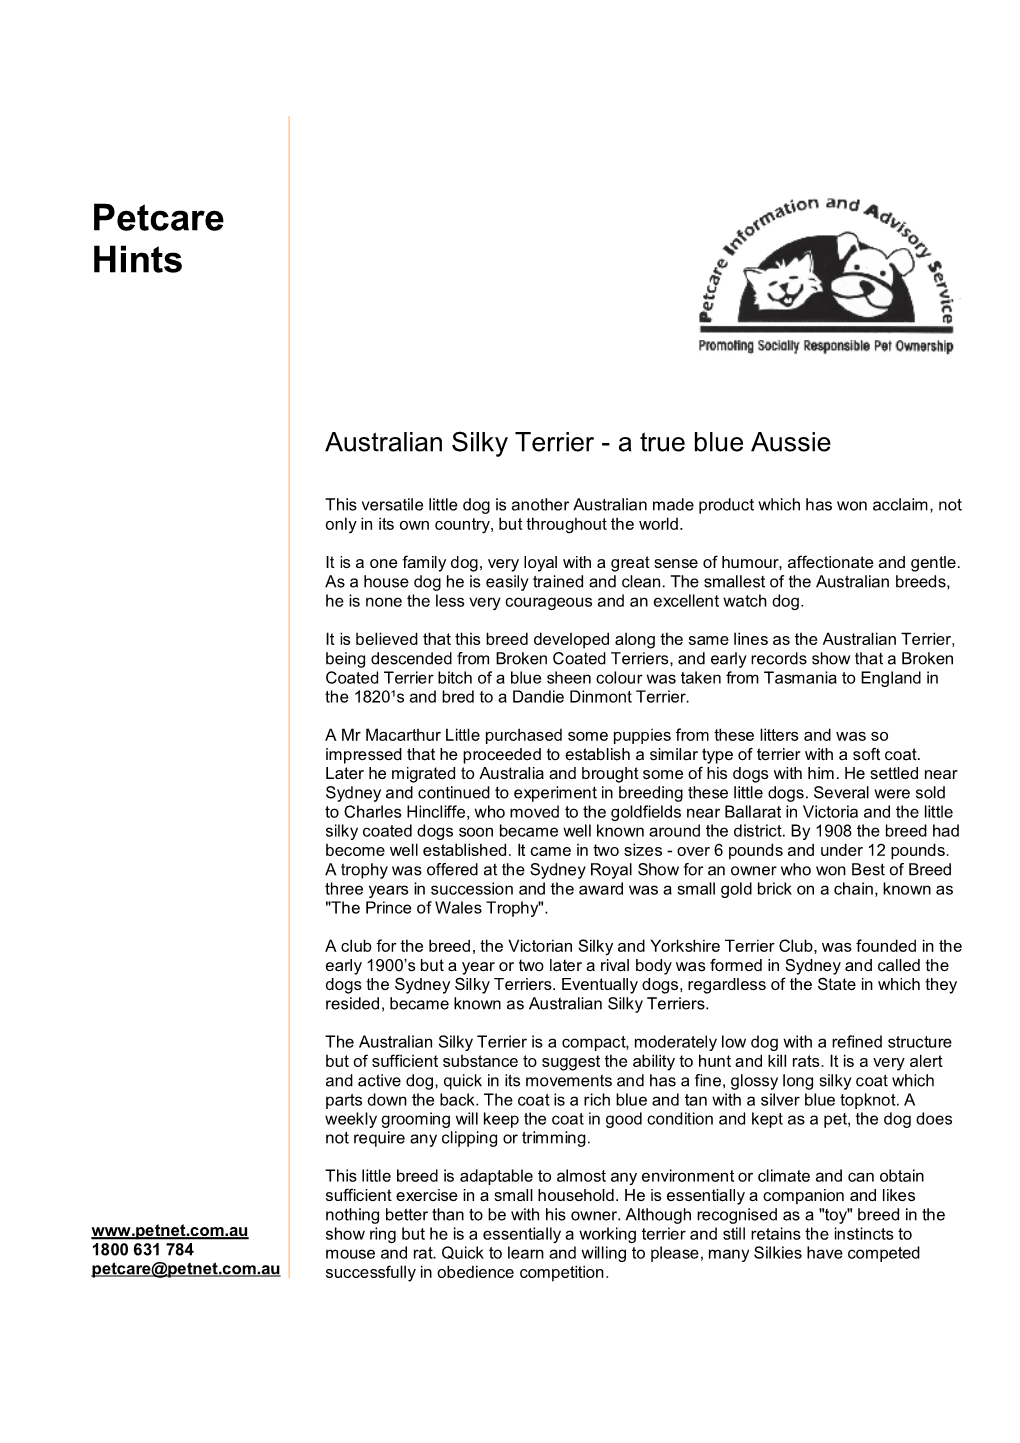 Australian Silky Terrier - a True Blue Aussie